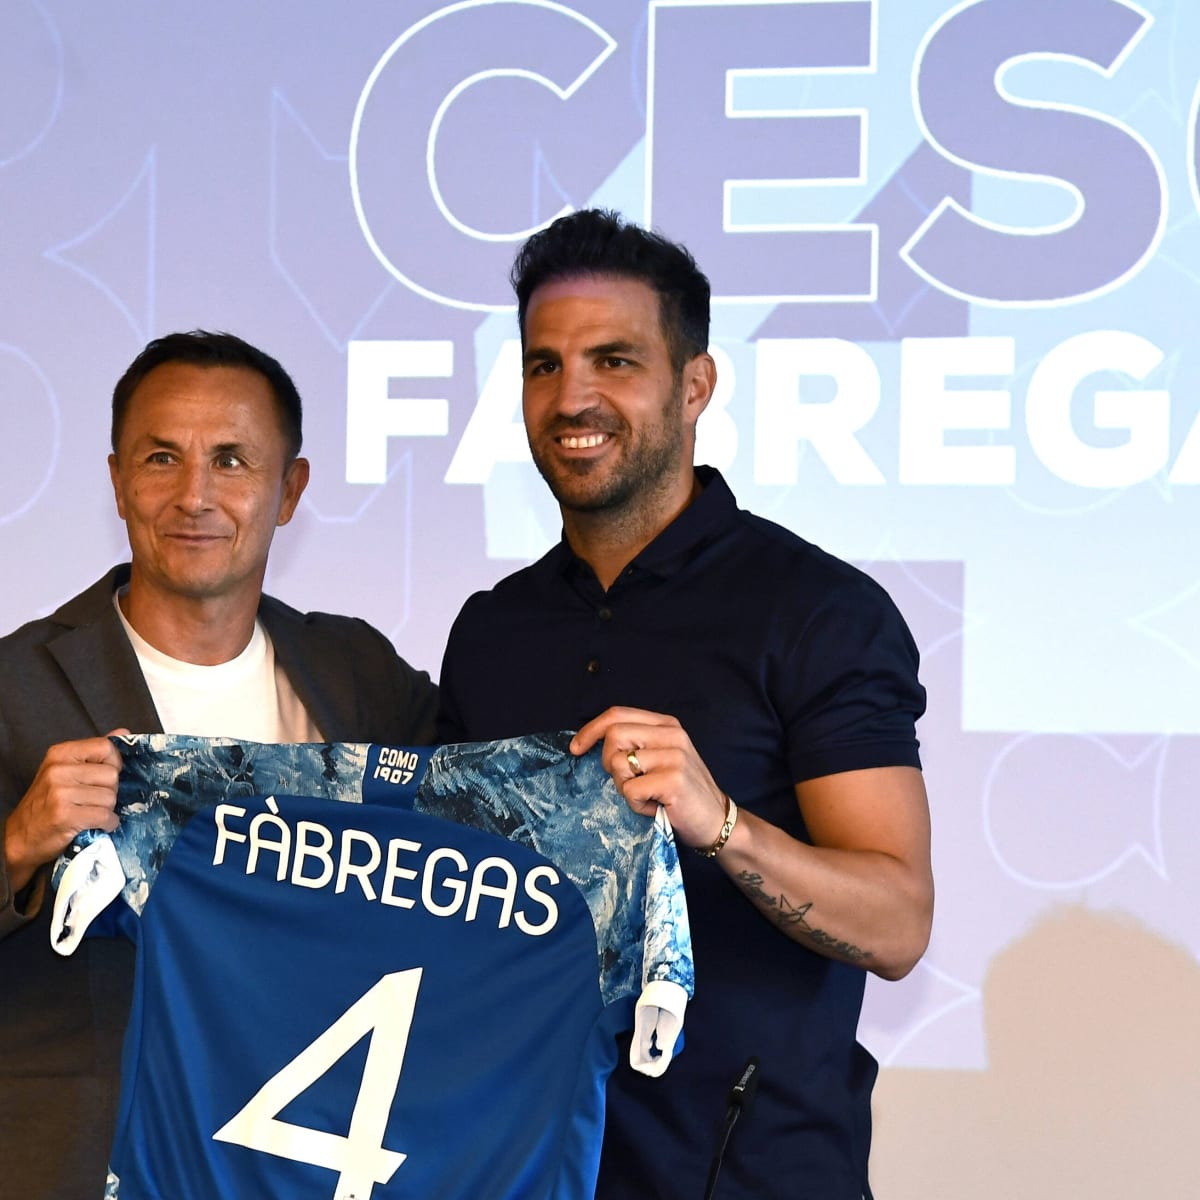 World Cup Winner Cesc Fabregas Joins Serie B Side Como: The midfielder Cesc Fabregas won the World Cup in 2010.